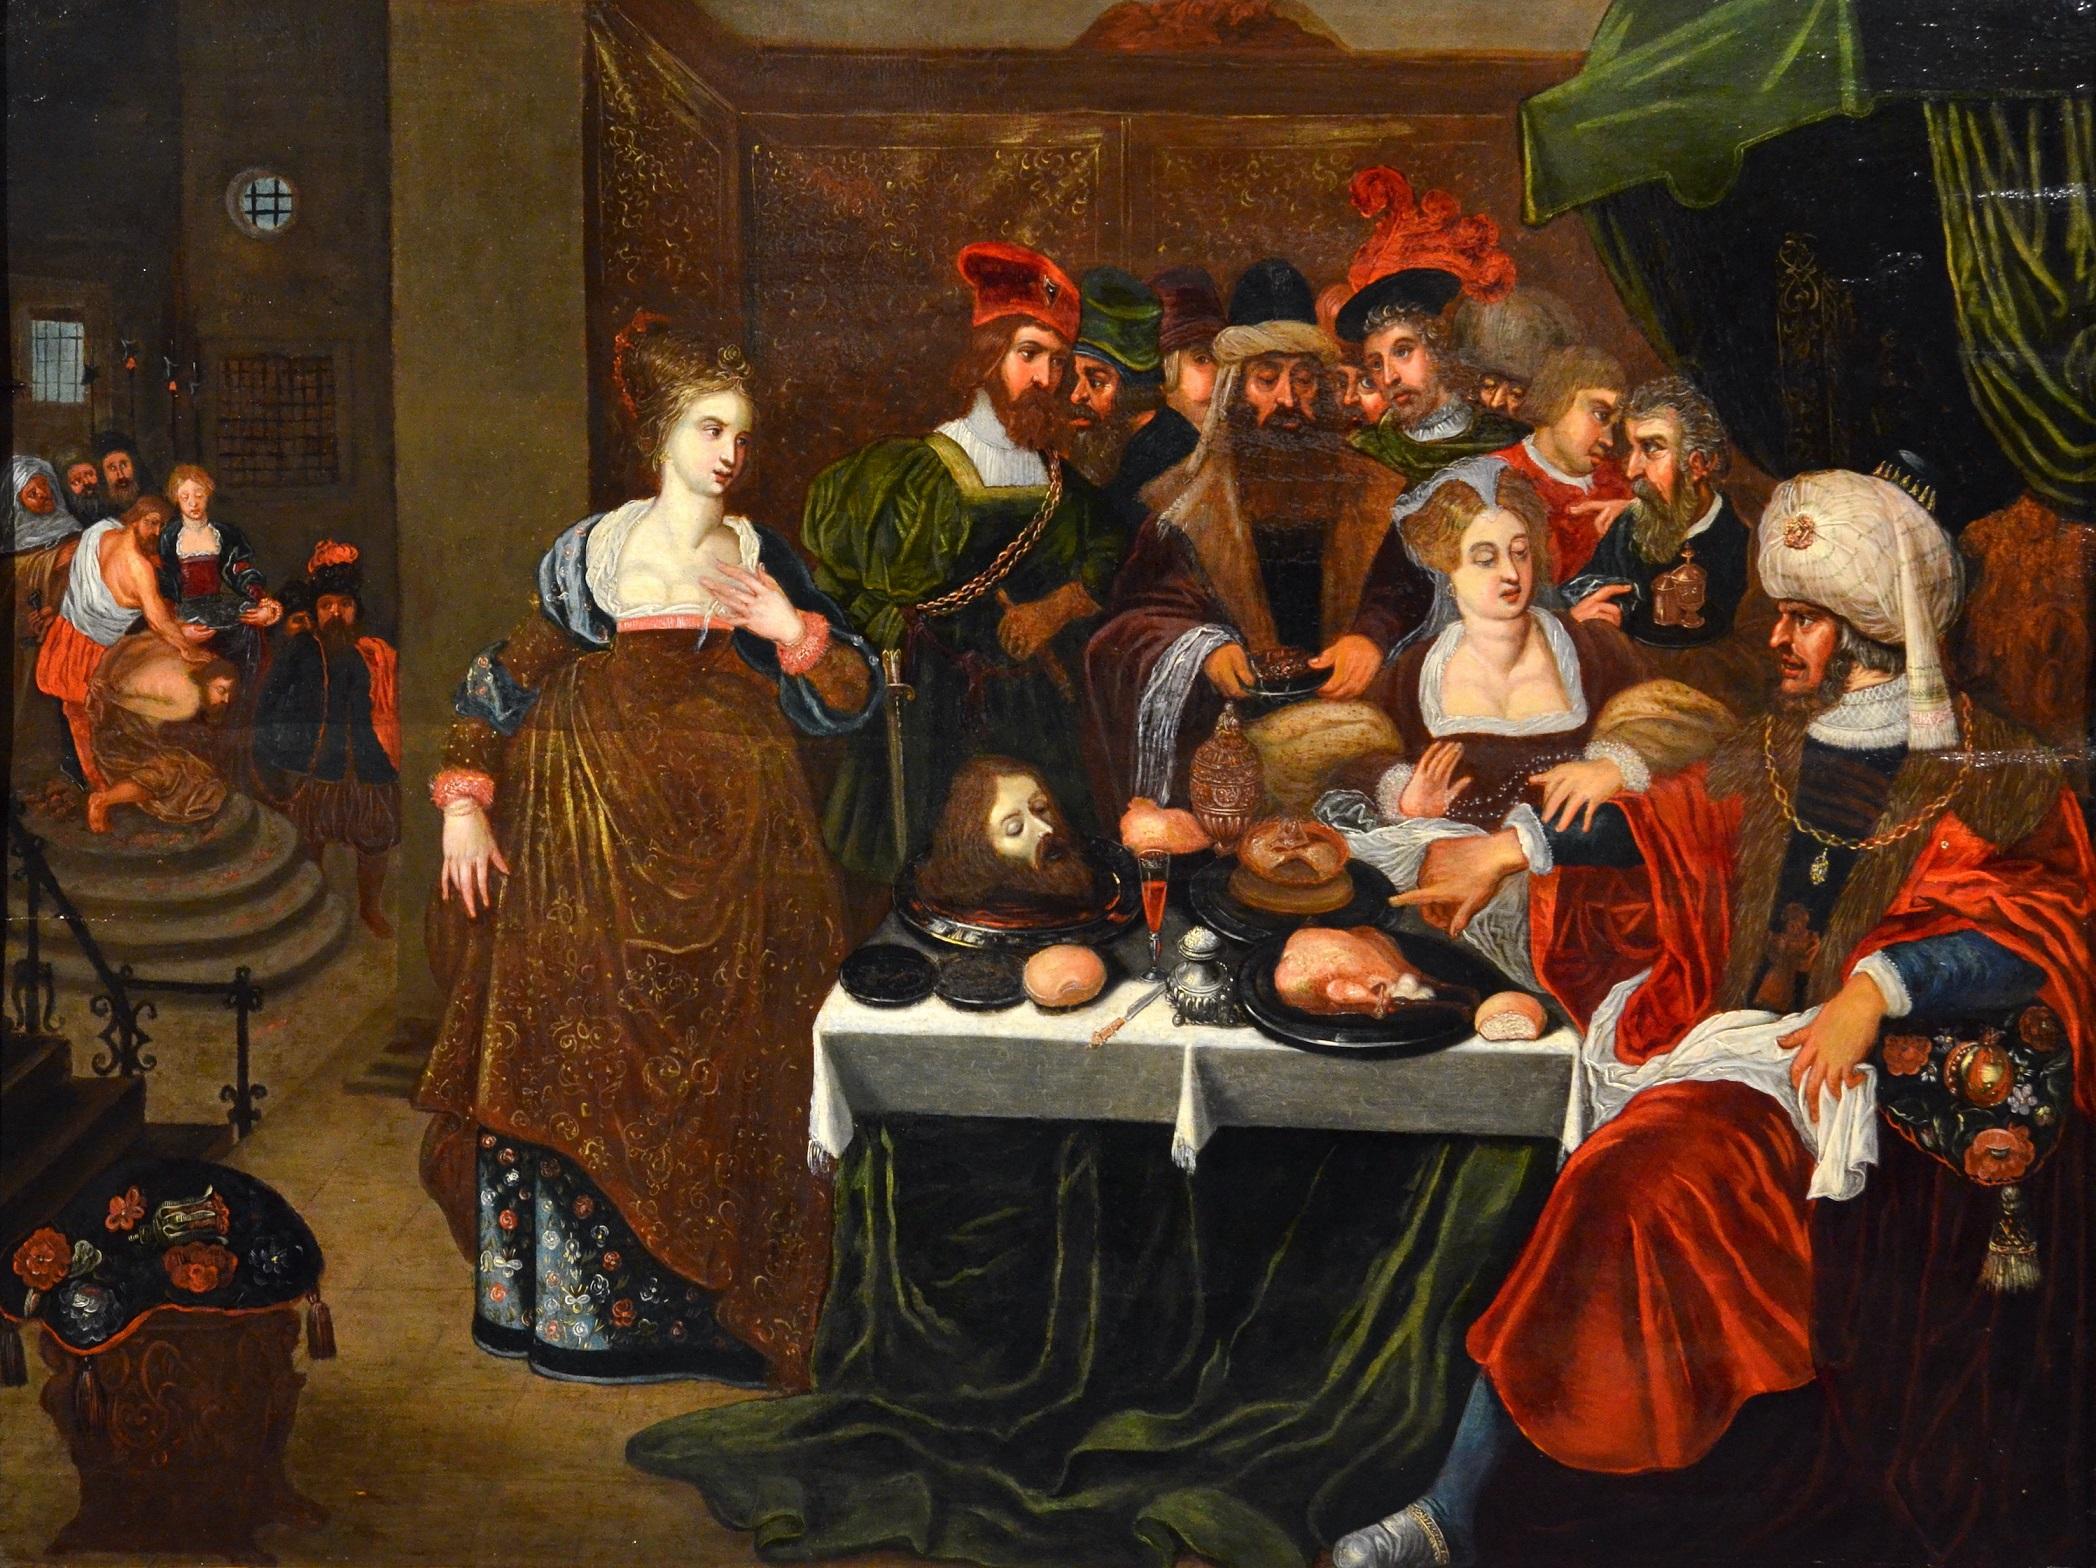 Banquet Attrib to Van Den Hoecke Religious Oil on Table Old Master 17th Century - Painting by Gaspar van den Hoecke (Antwerp, 1585 - 1648)